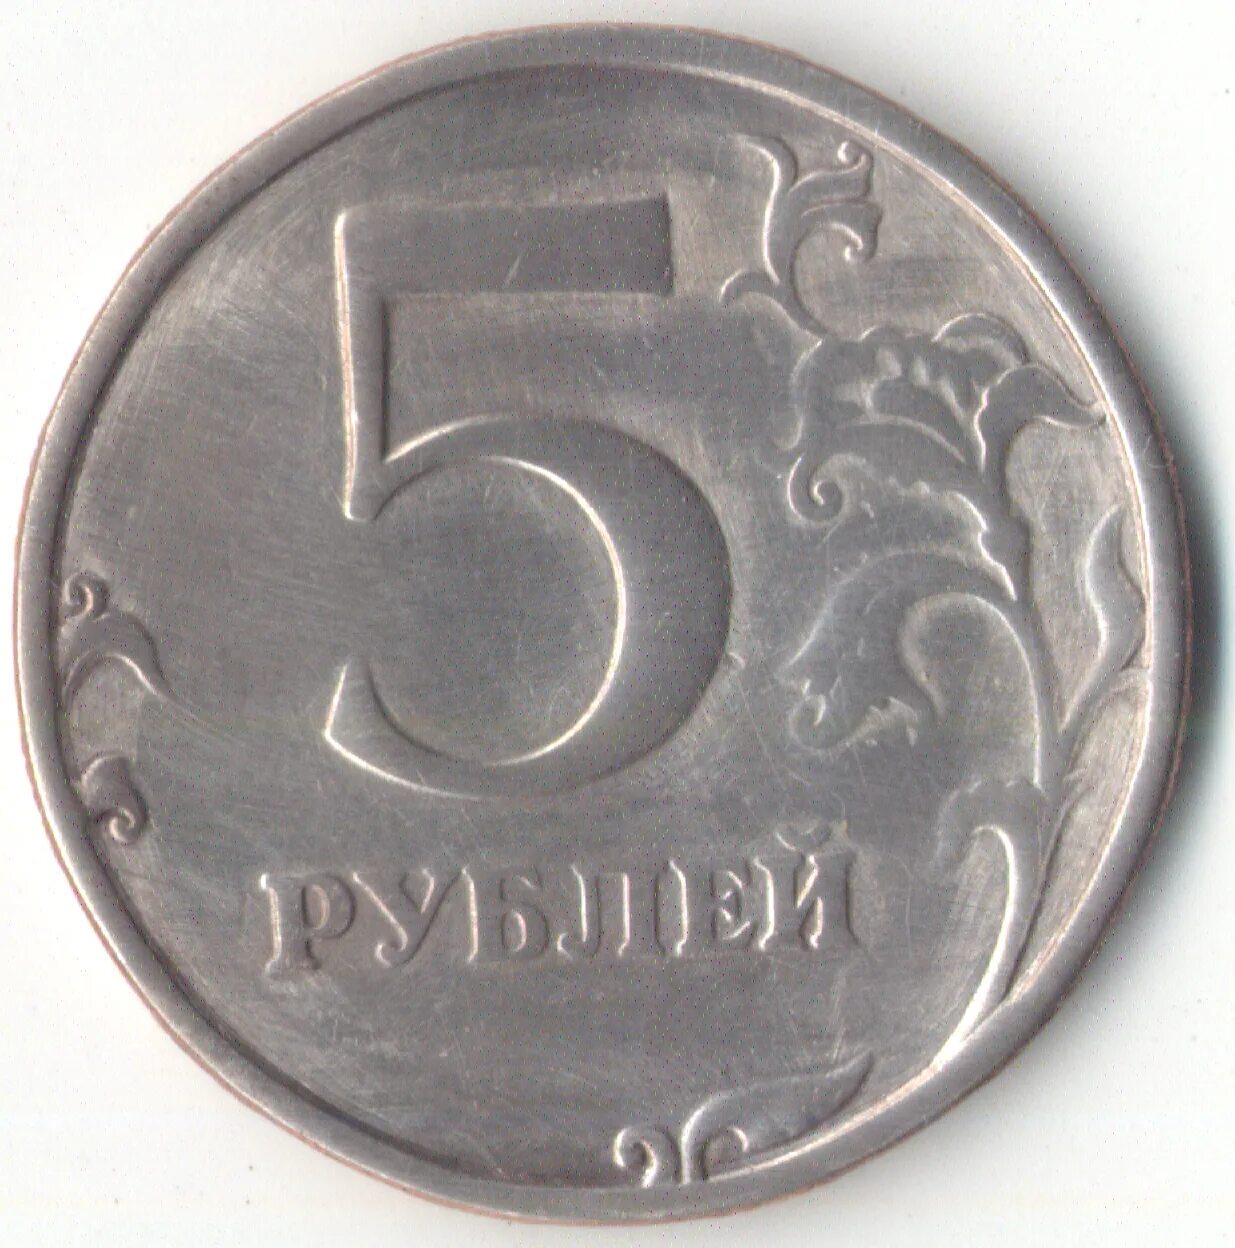 5 рублей в сумах. 5 Рублей 2015 ММД. 5 Рублей 1997 ММД брак штампа Канта. Монета 5 рублей. Монетка 5 рублей.